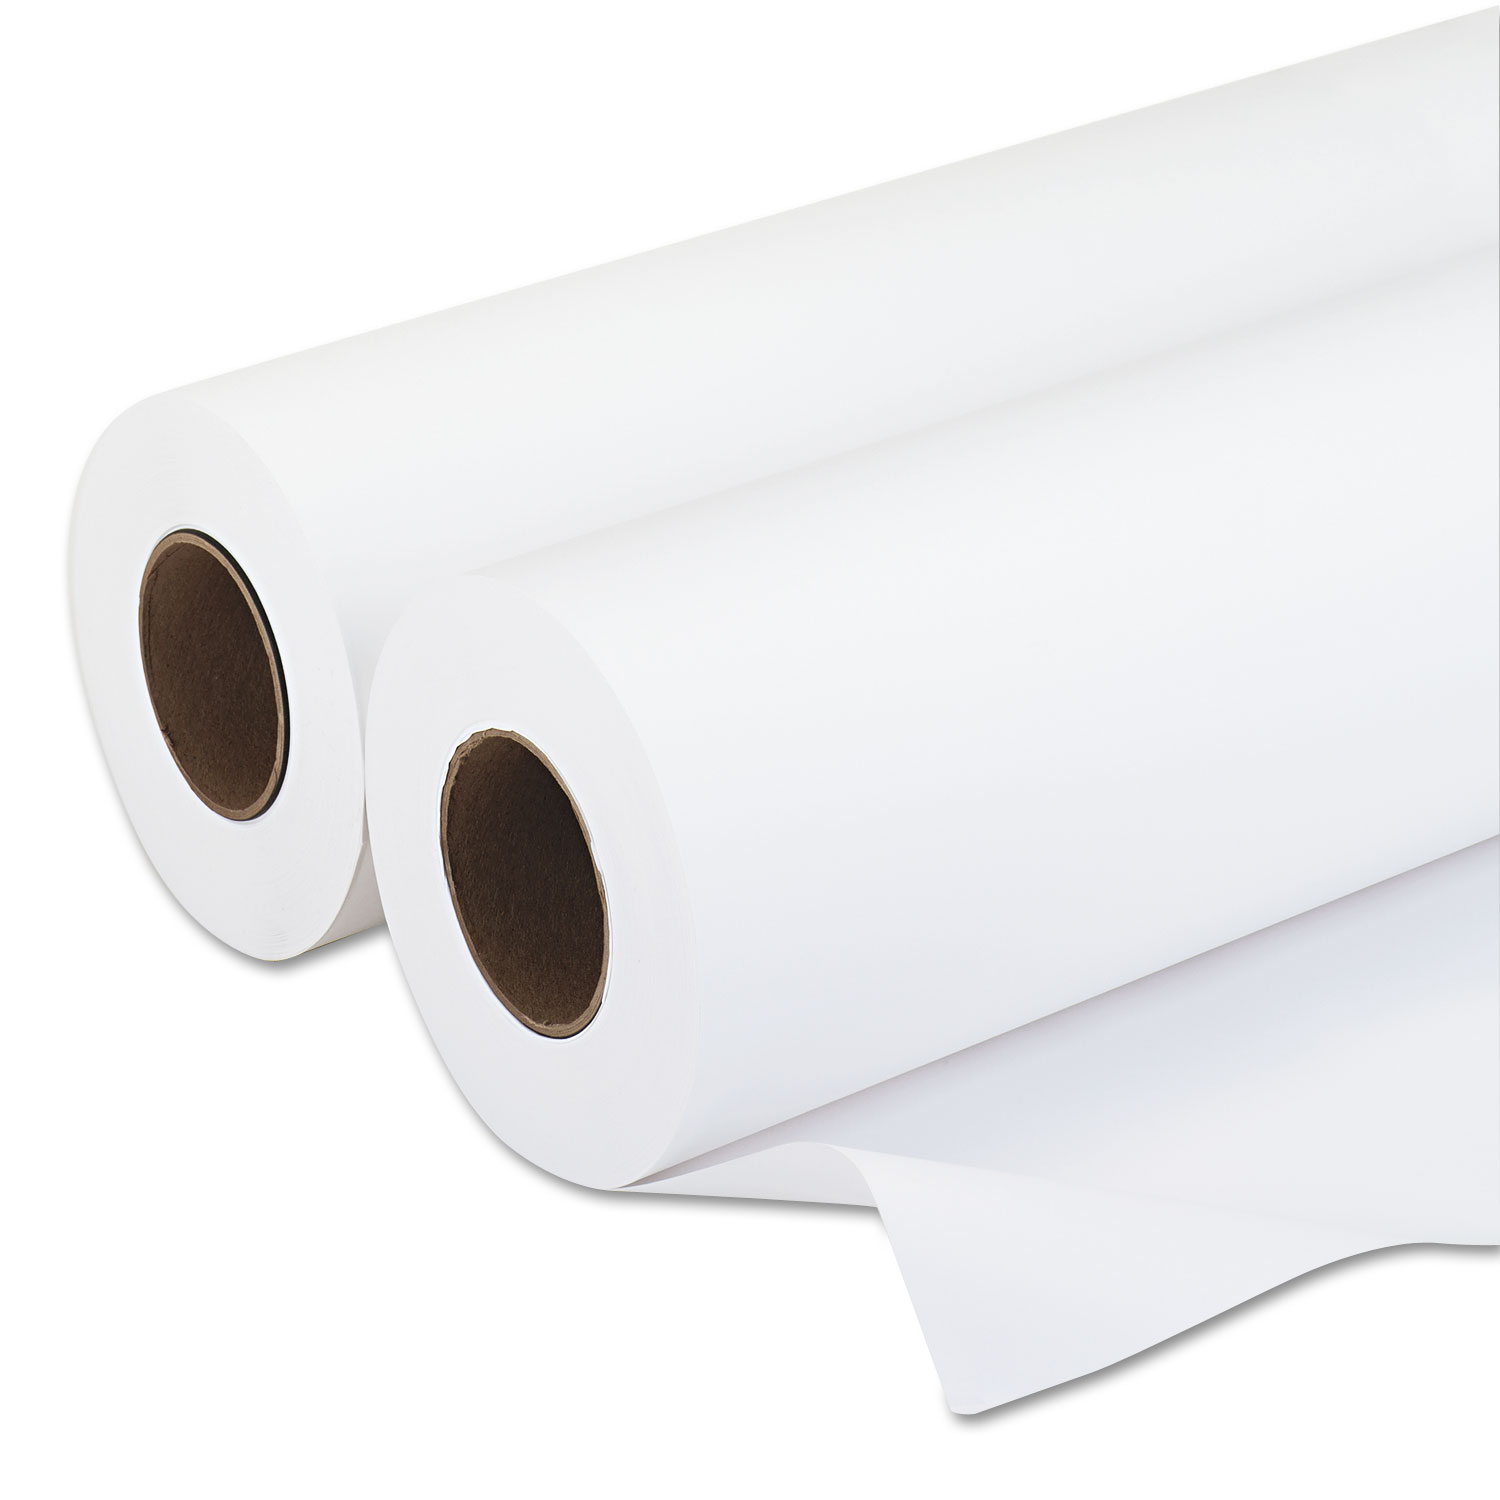  Iconex 9124 Amerigo Wide-Format Paper, 3 Core, 20 lb, 24 x 500 ft, Smooth White, 2/Pack (ICX90750202) 